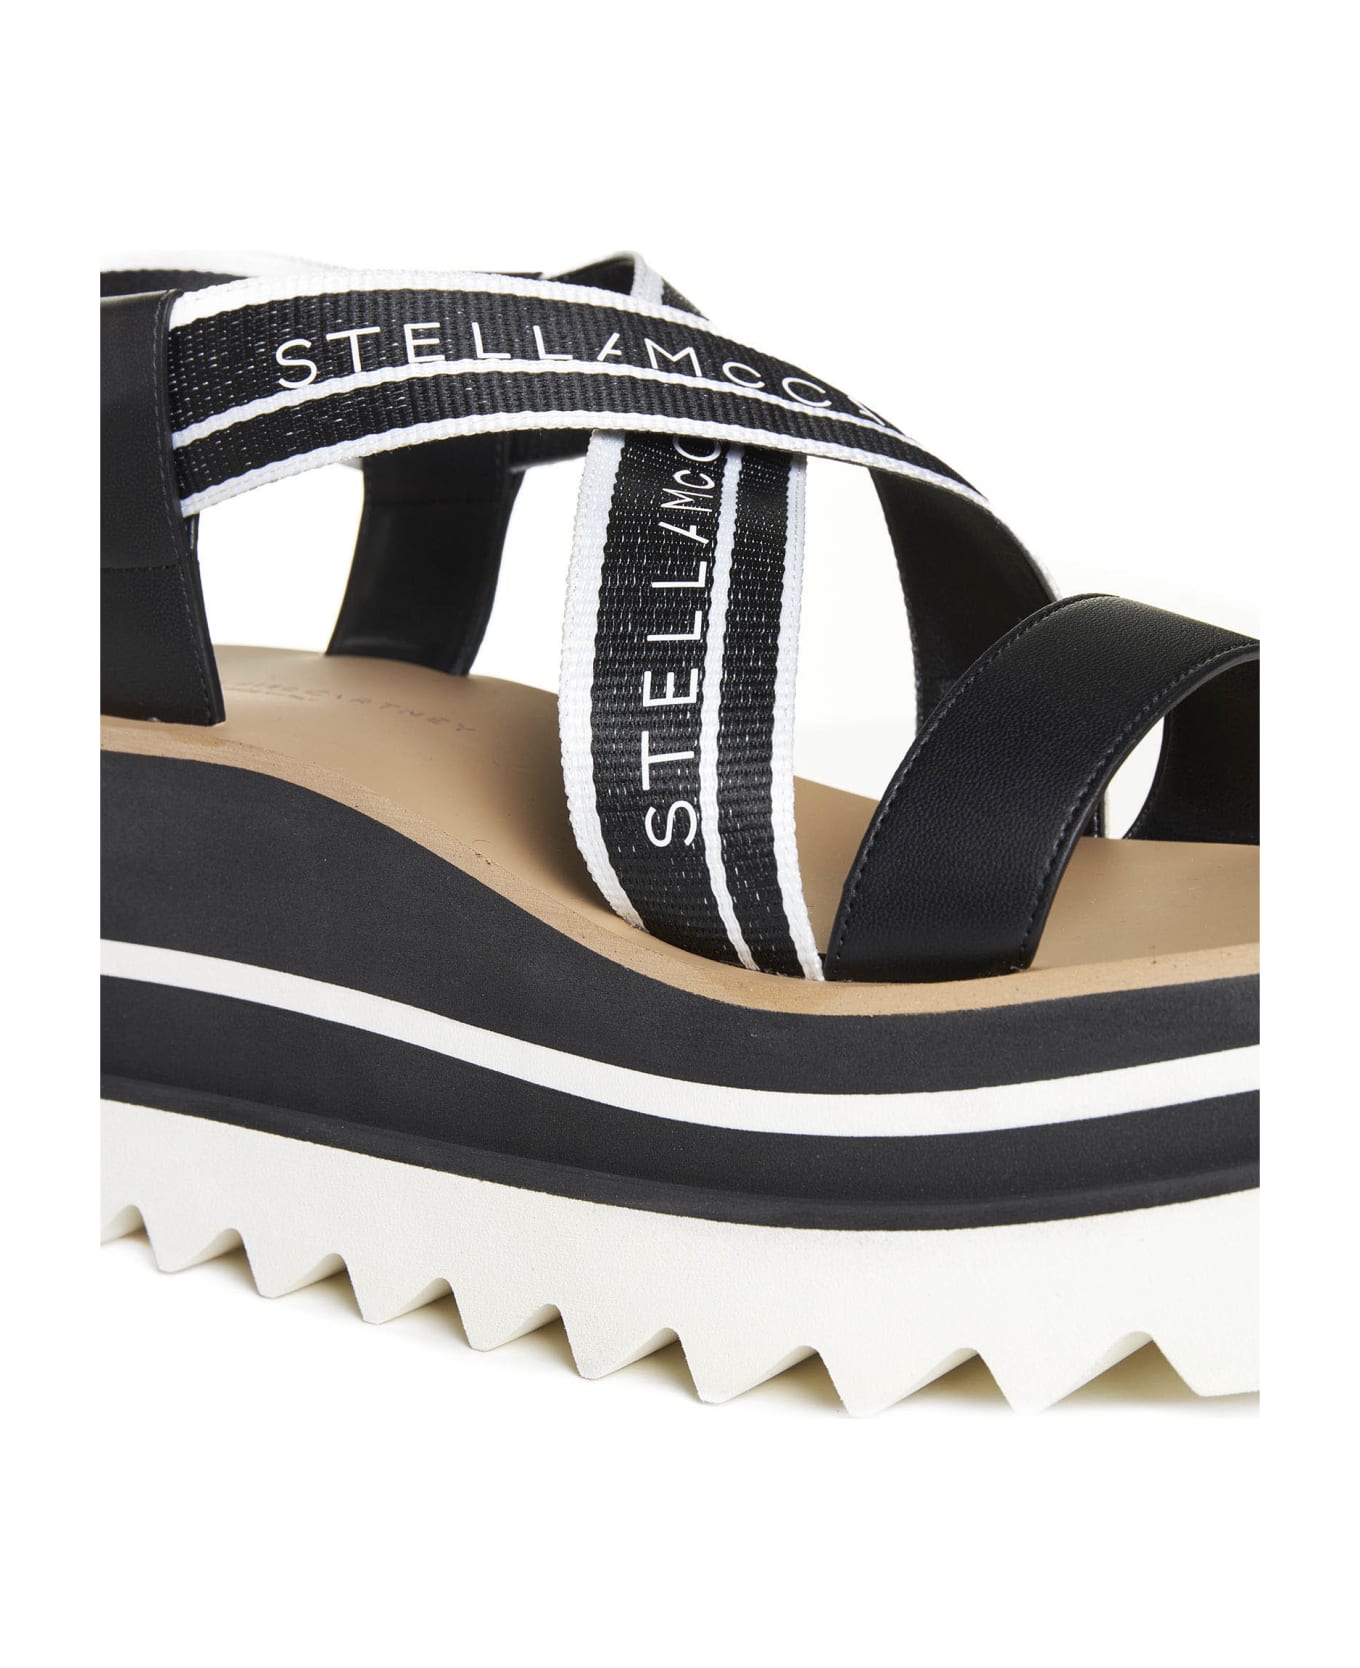 Stella McCartney Sneak Elyse Sandals - Black/white サンダル